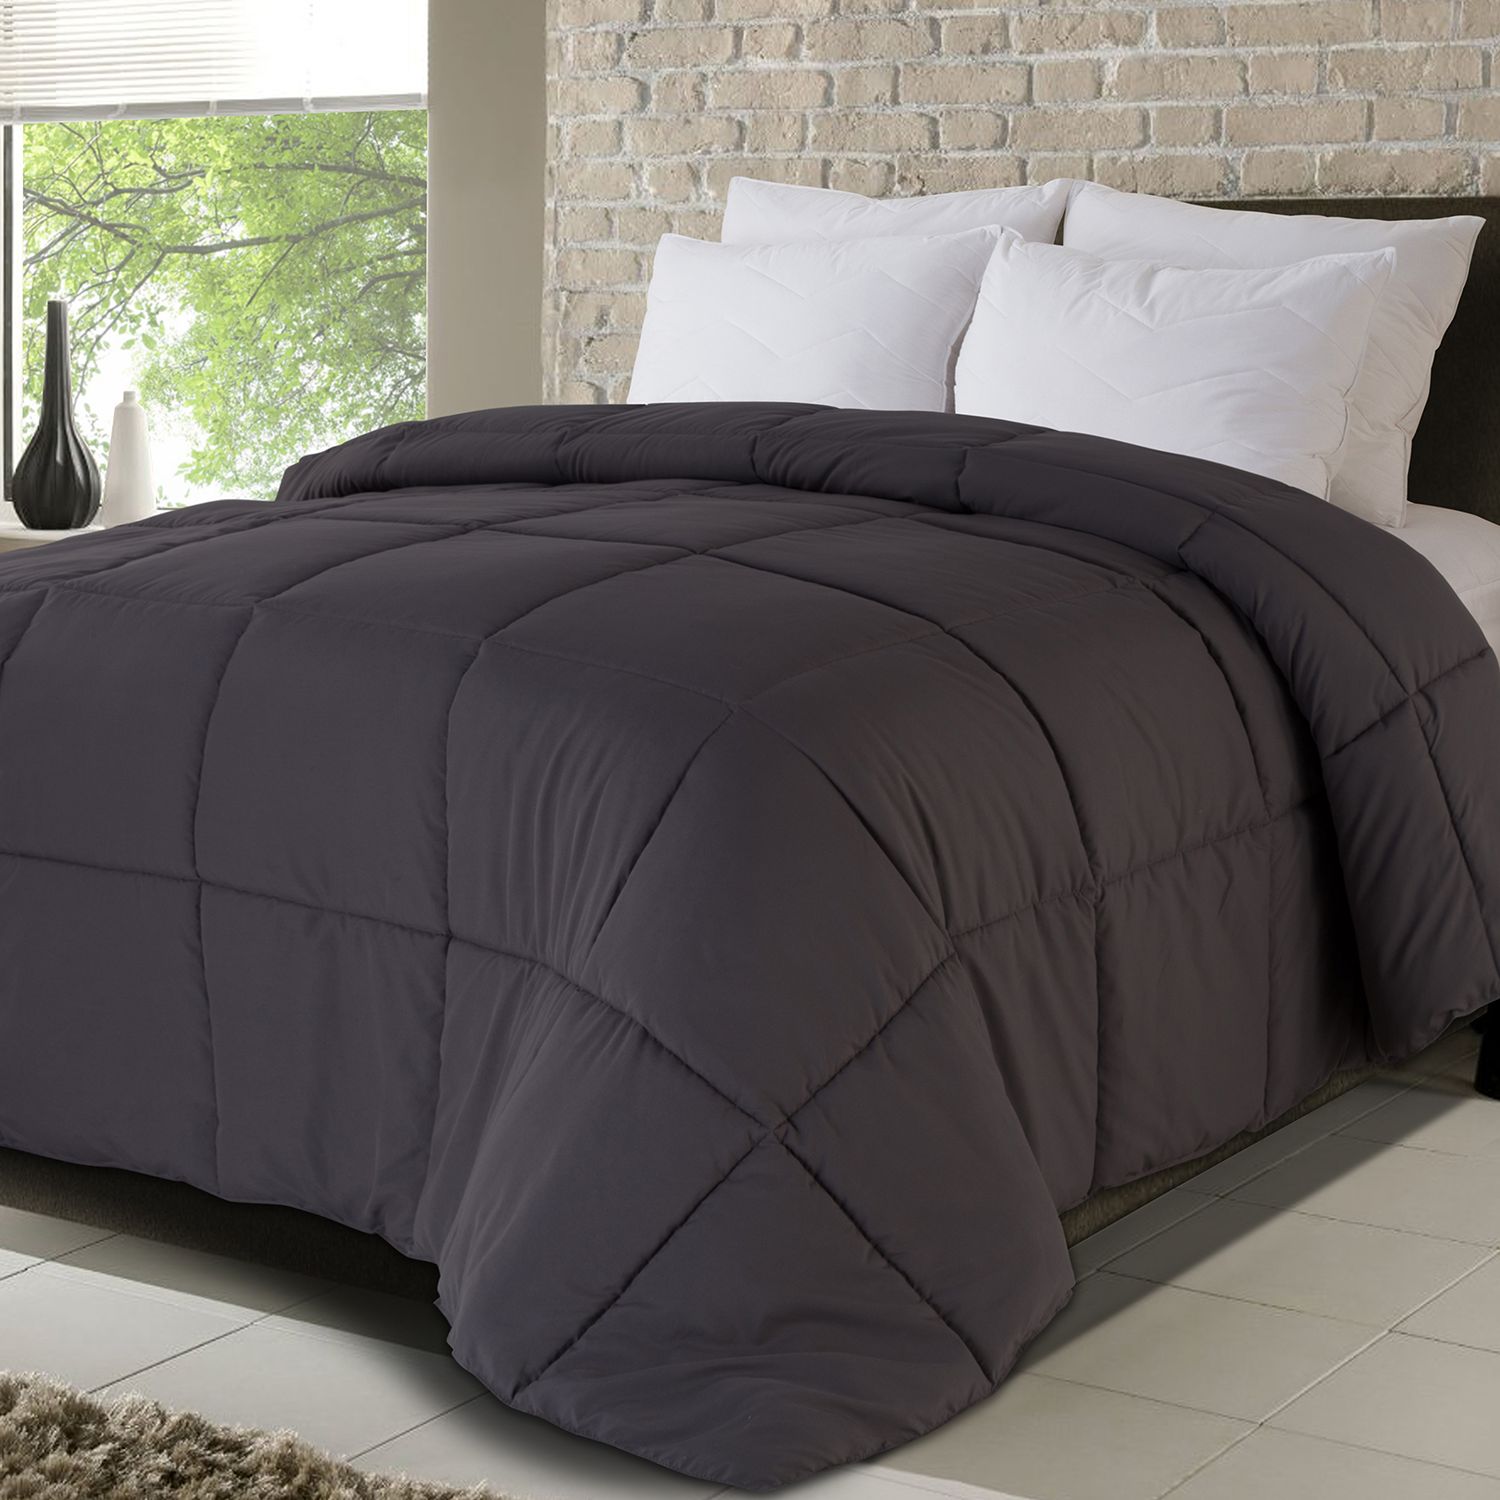 Image for Down Home All Season Microsoft Down-Alternative Comforter at Kohl's.